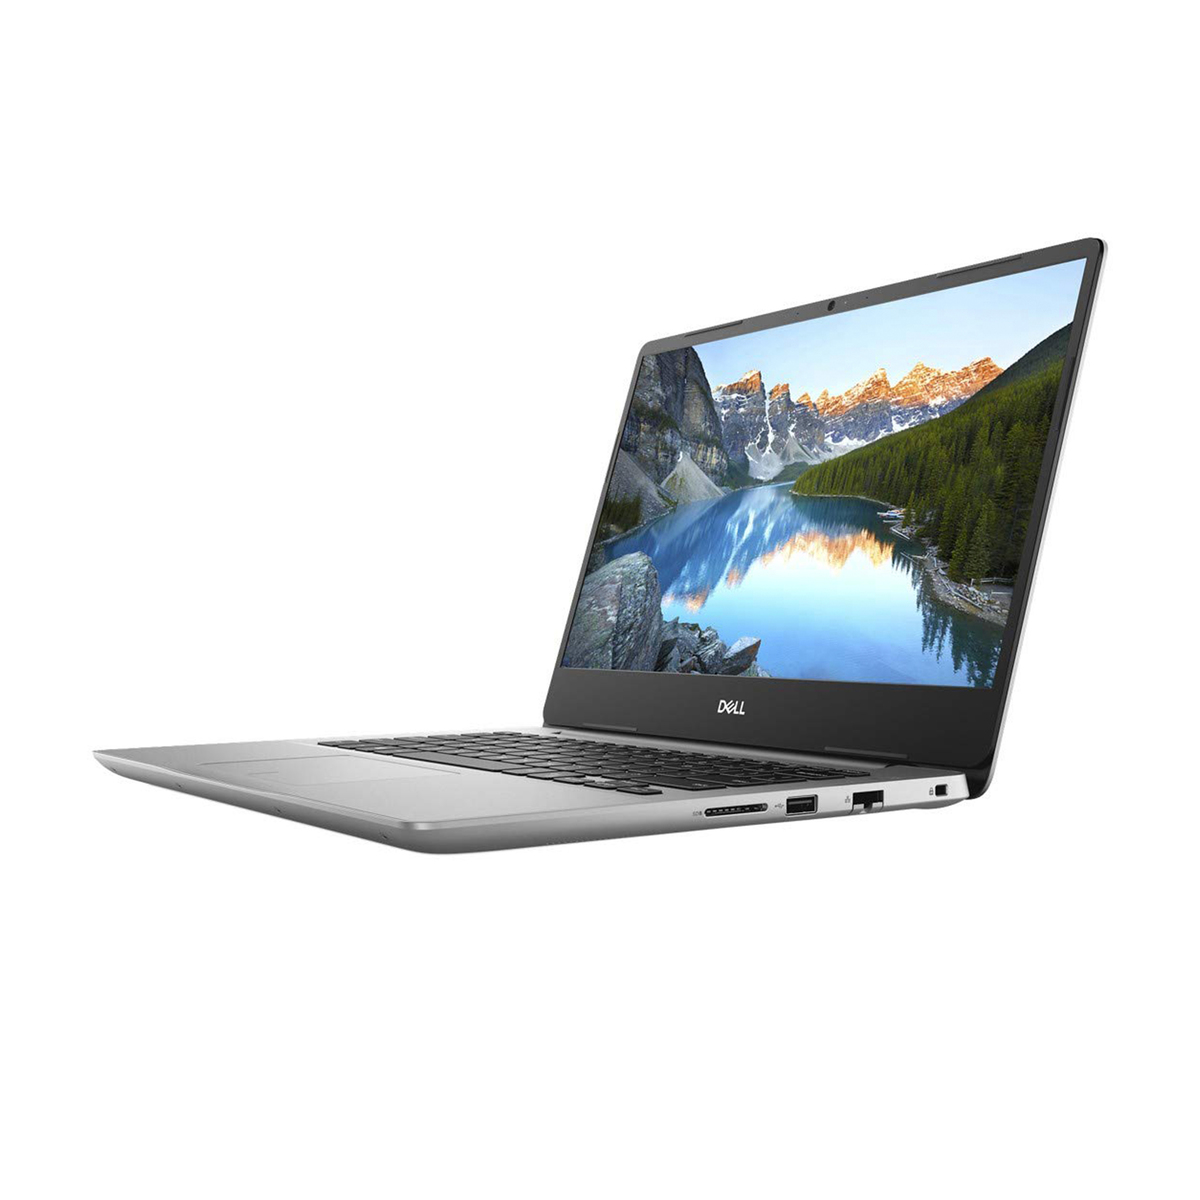 DELL 5480 Inspiron (5480-INS-1299-SLR) Clamshell Laptop, Intel Core i5-8265U, 14 Inch, 256GB SSD, 8GB RAM,Nvidia MX 250 2GB, Windows 10,14 inch IPS FHD, Silver